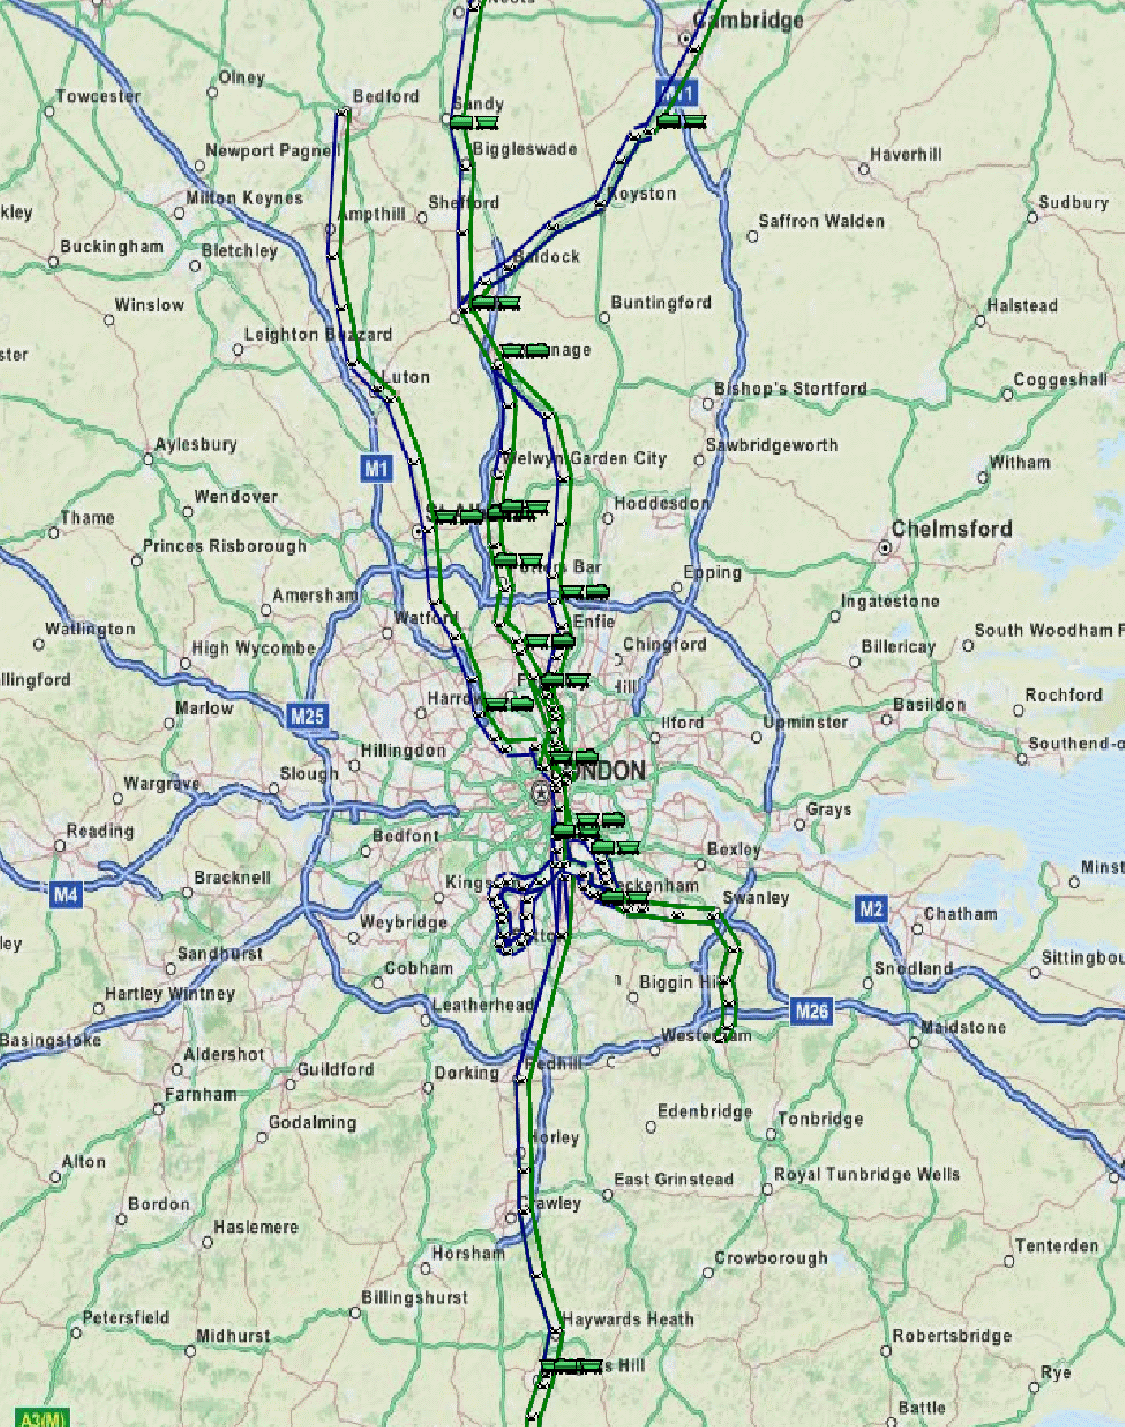 Examining London's metropolitan rail network